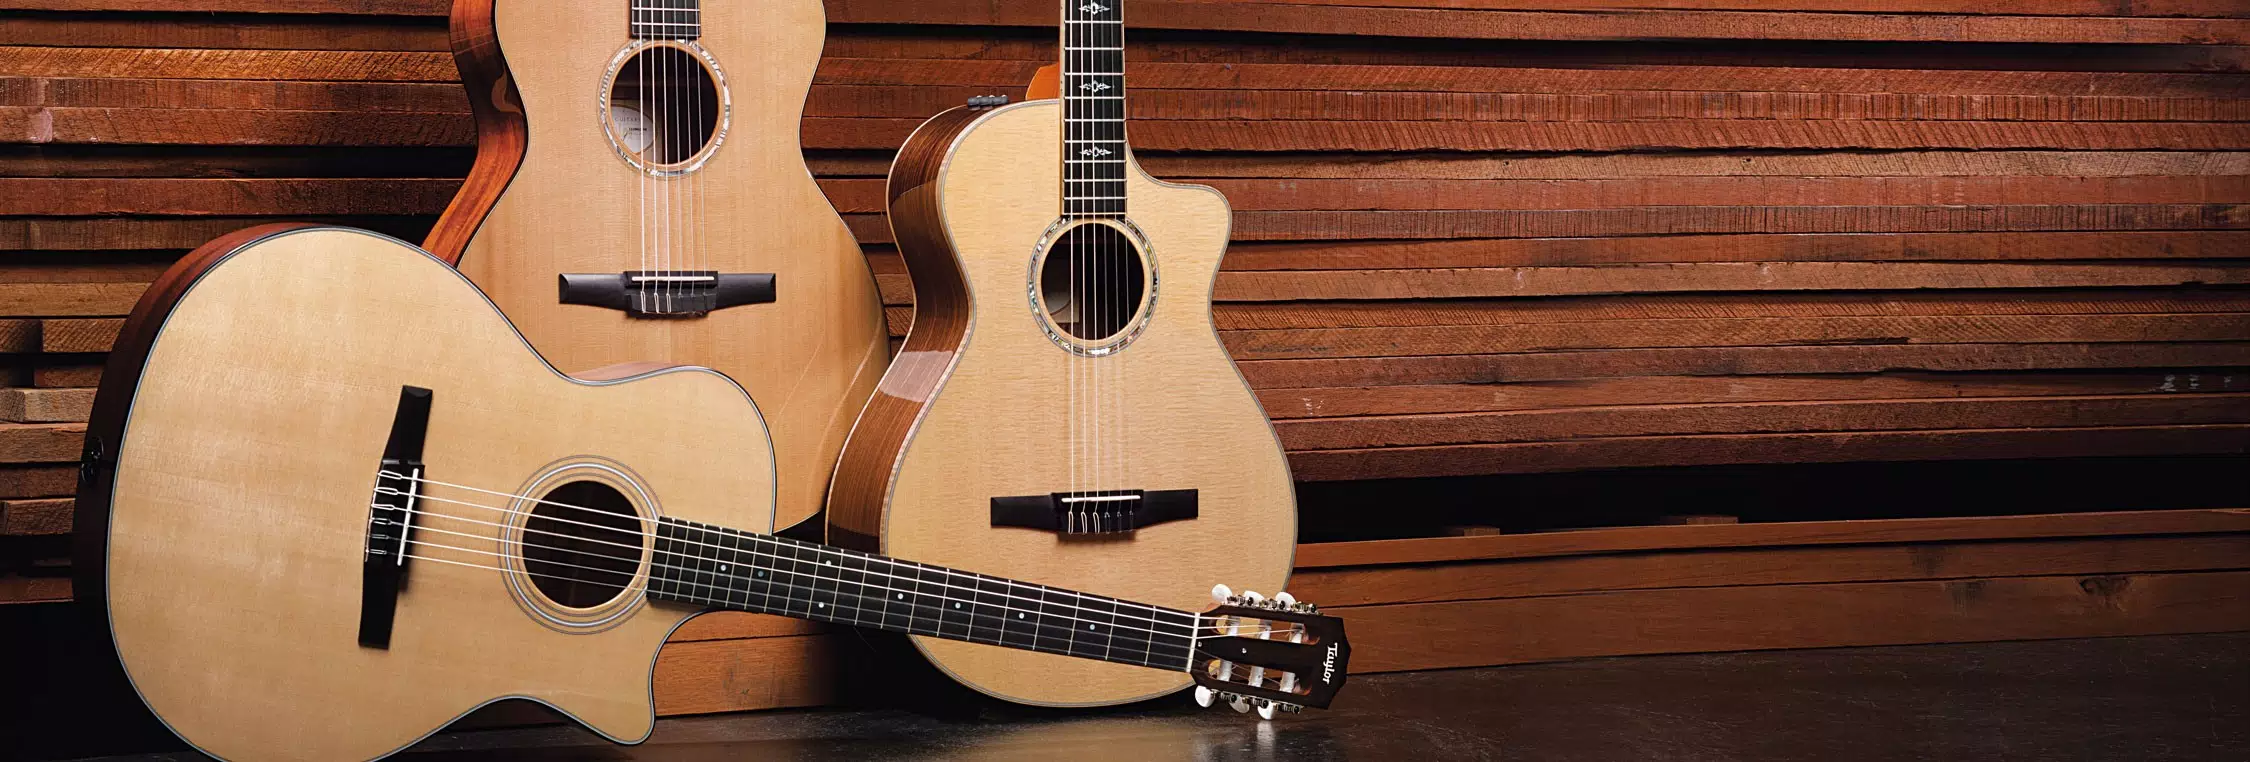 Nylon String Guitars - Classical Acoustic | Taylor Guitars